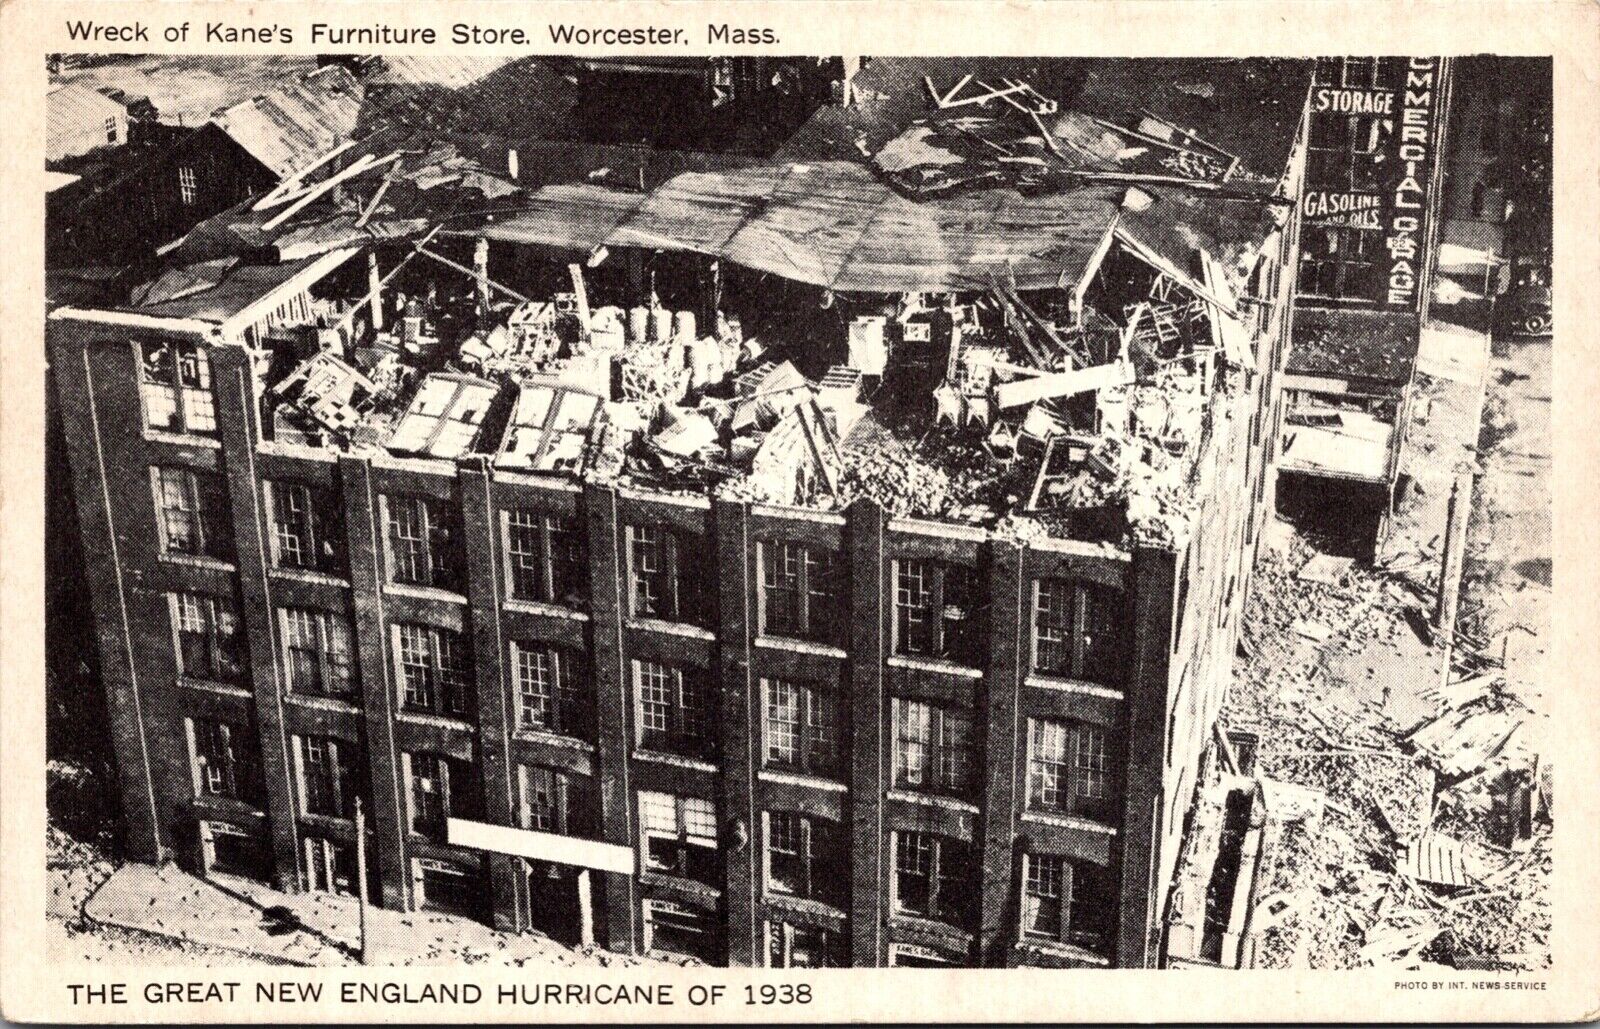 PC Wreck of Kane's Furniture Store 1938 Hurricane in Worcester, Massachusetts